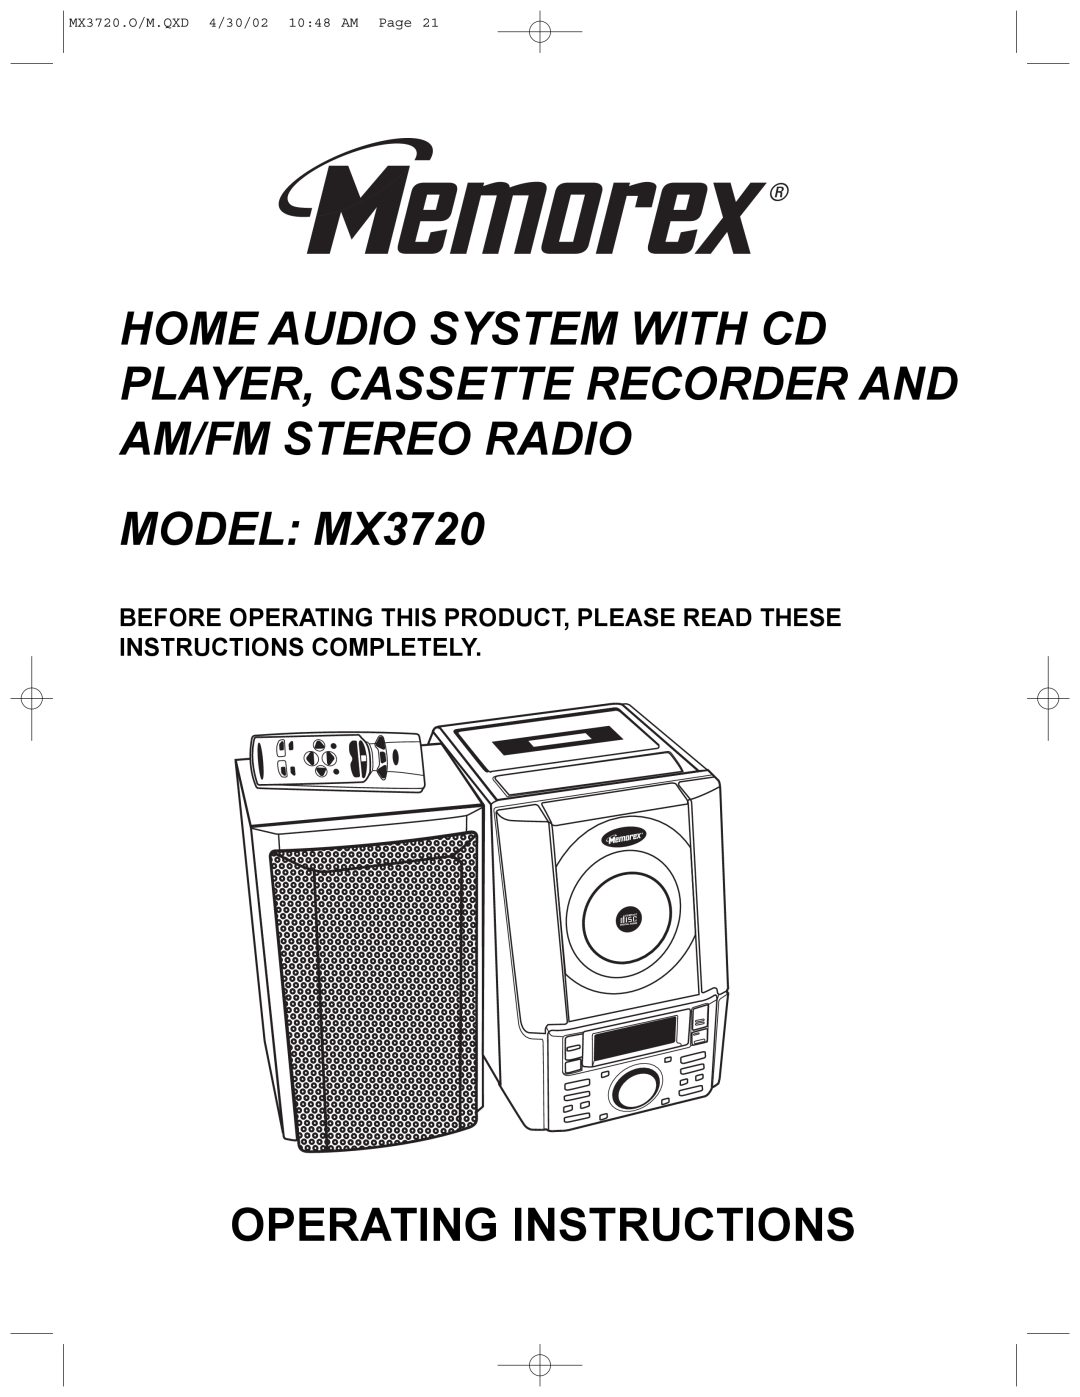 Memorex manual MODEL MX3720, Operating Instructions, MX3720.O/M.QXD 4/30/02 10 48 AM Page 